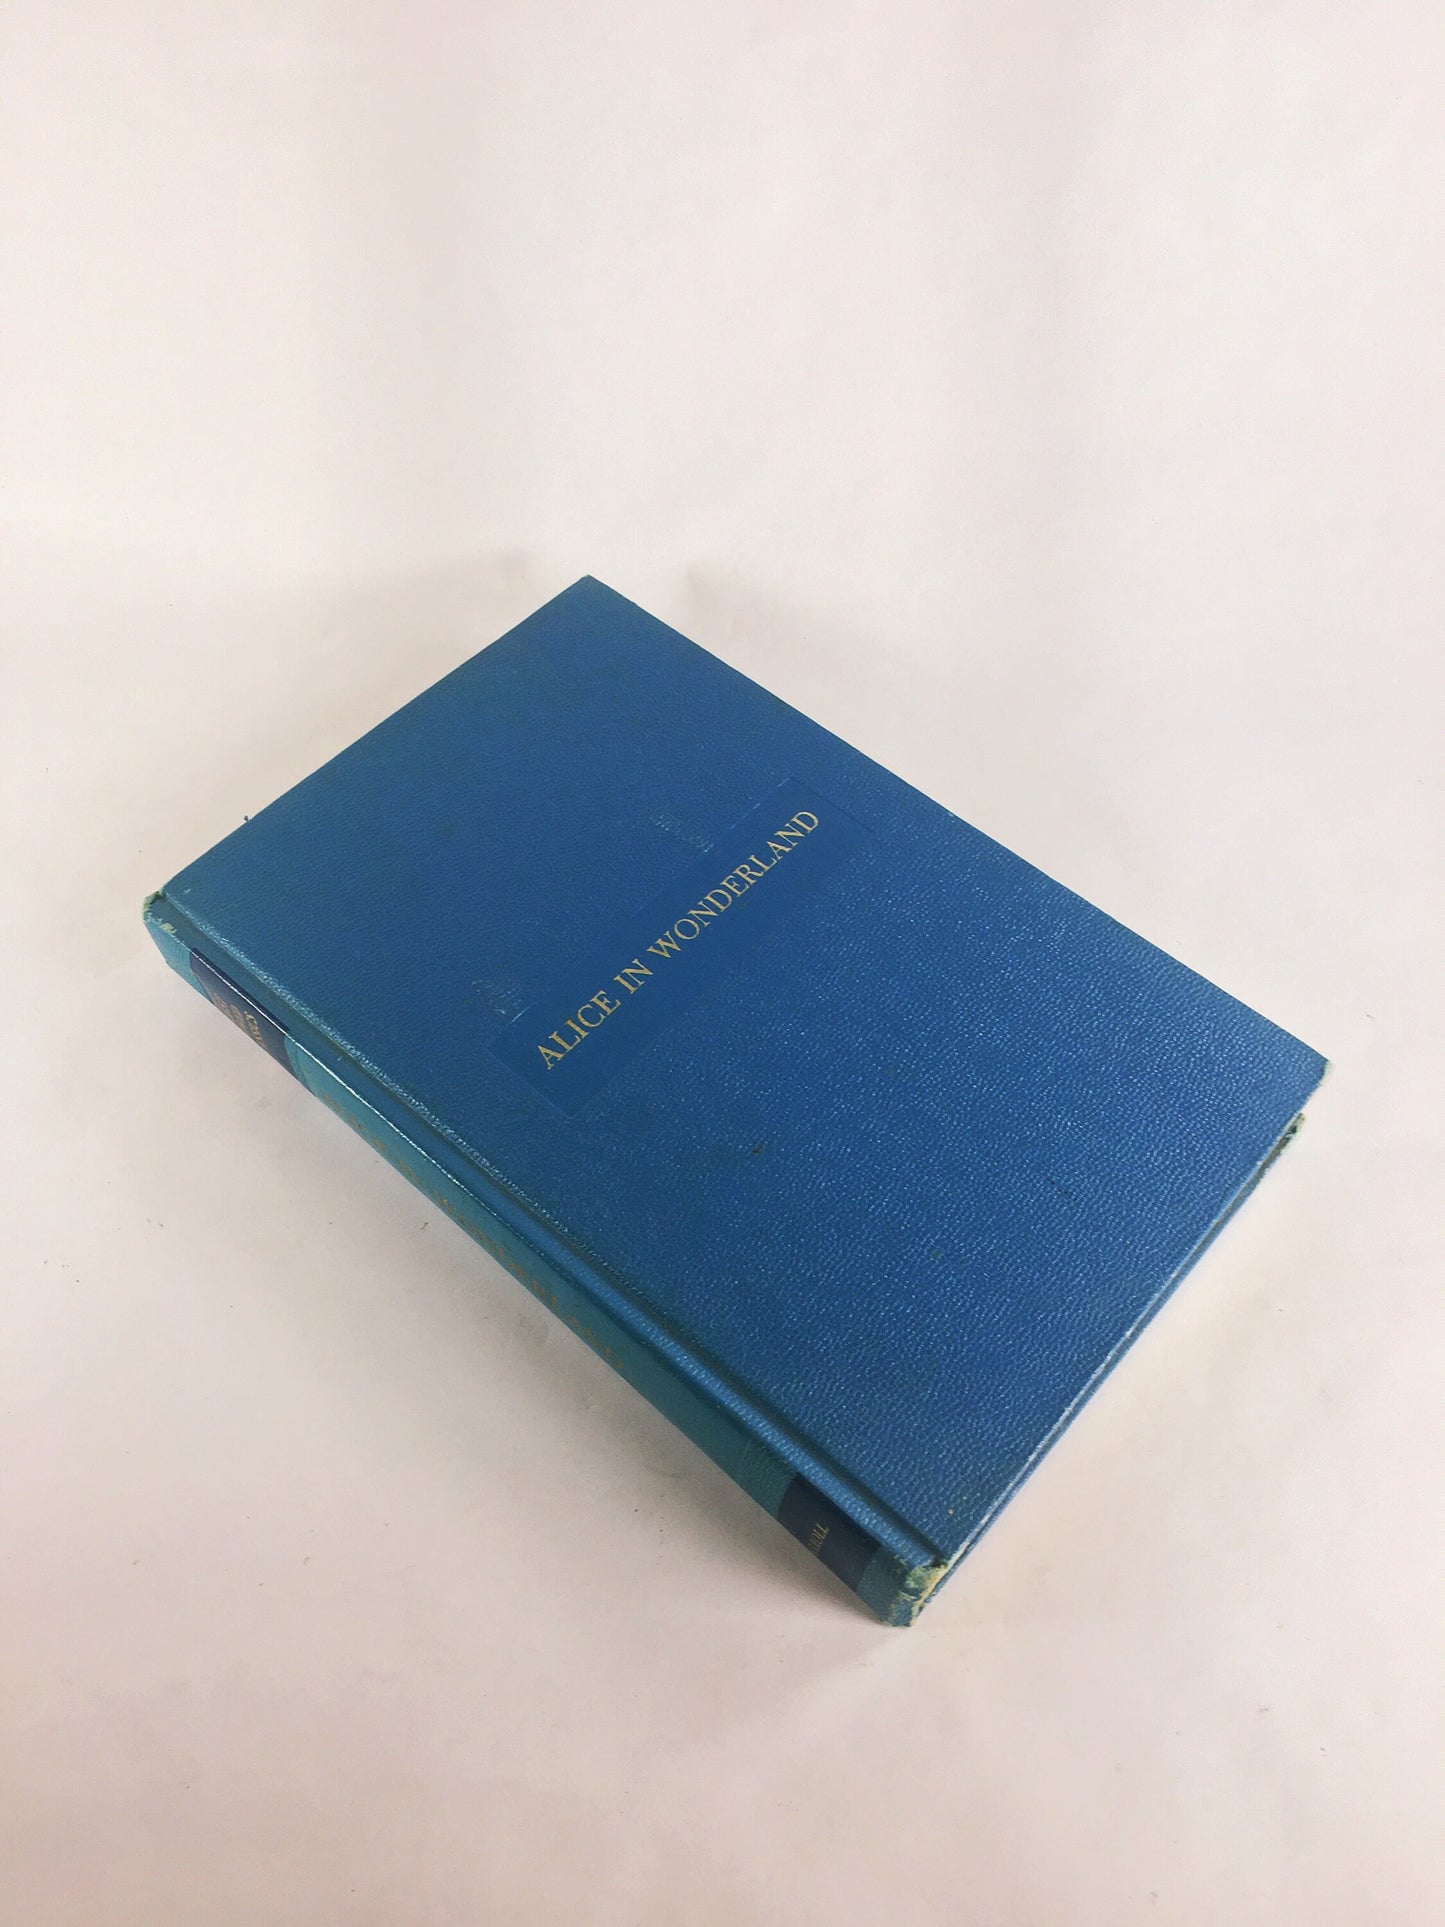 Alice in Wonderland, Pride & Prejudice Robinson Crusoe Huckleberry Finn Vintage Best Loved Classics sky blue book set circa 1949.